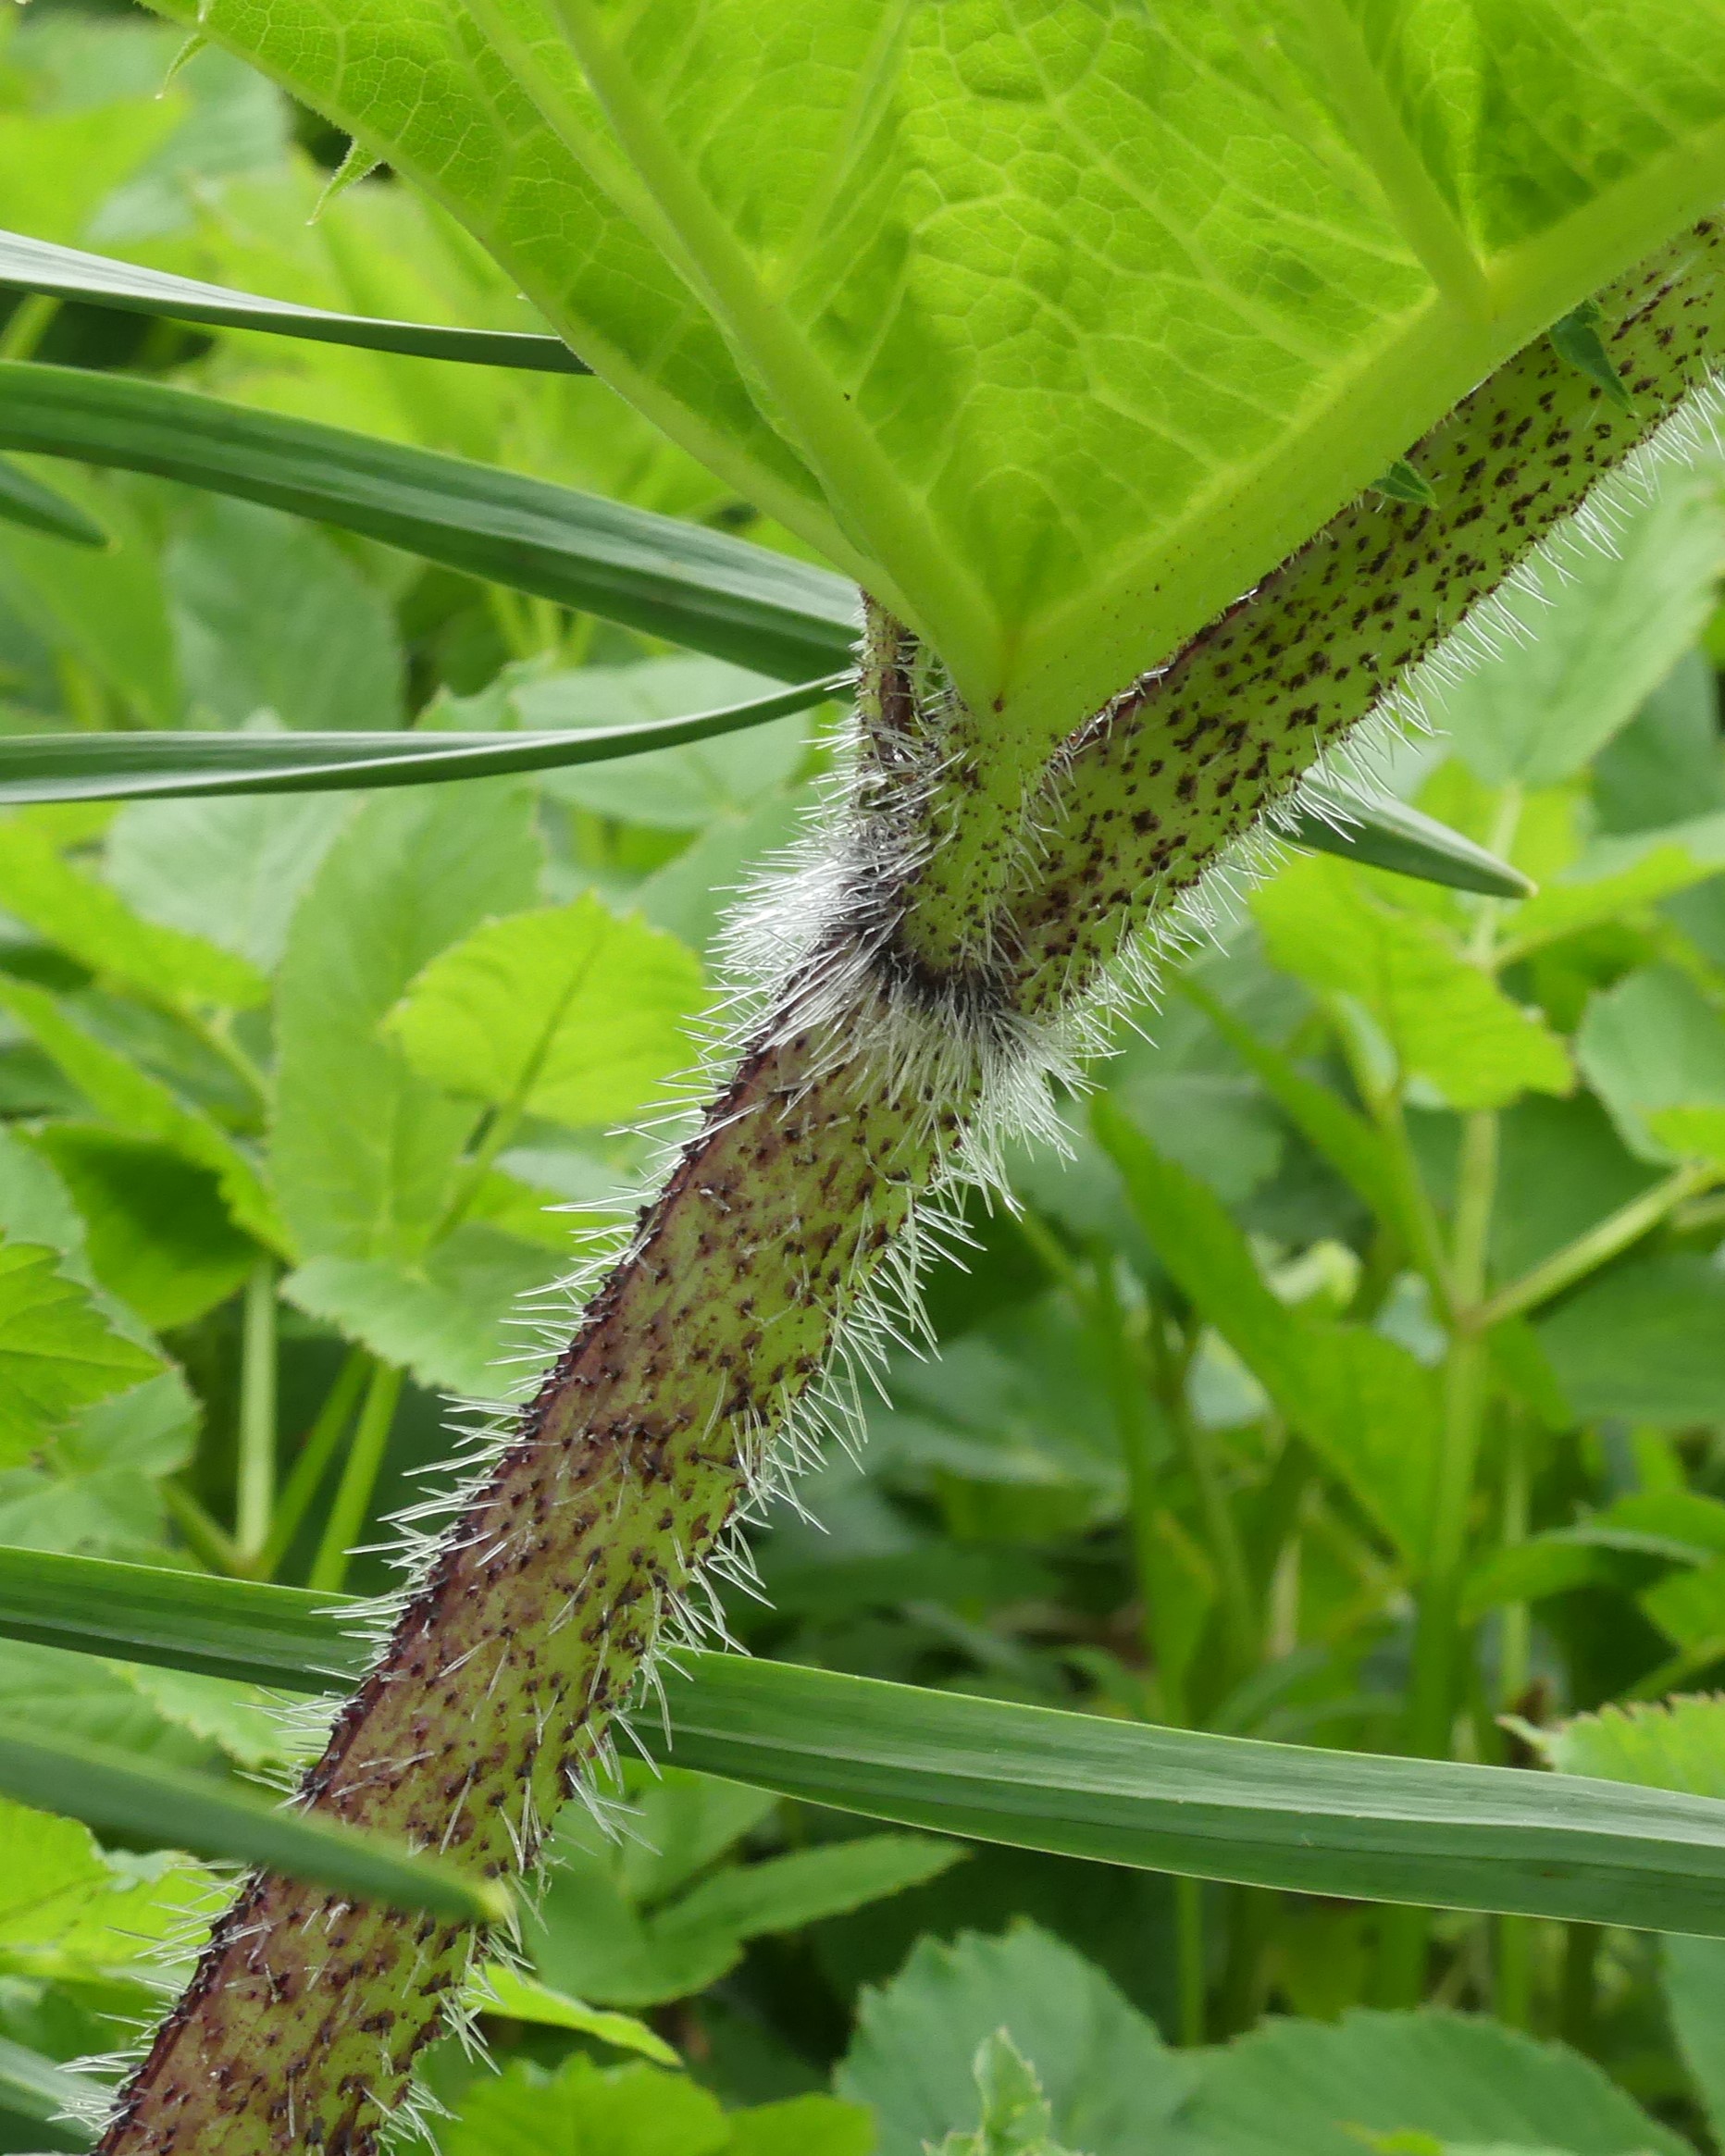 Bristles visible on giant hogweed stem